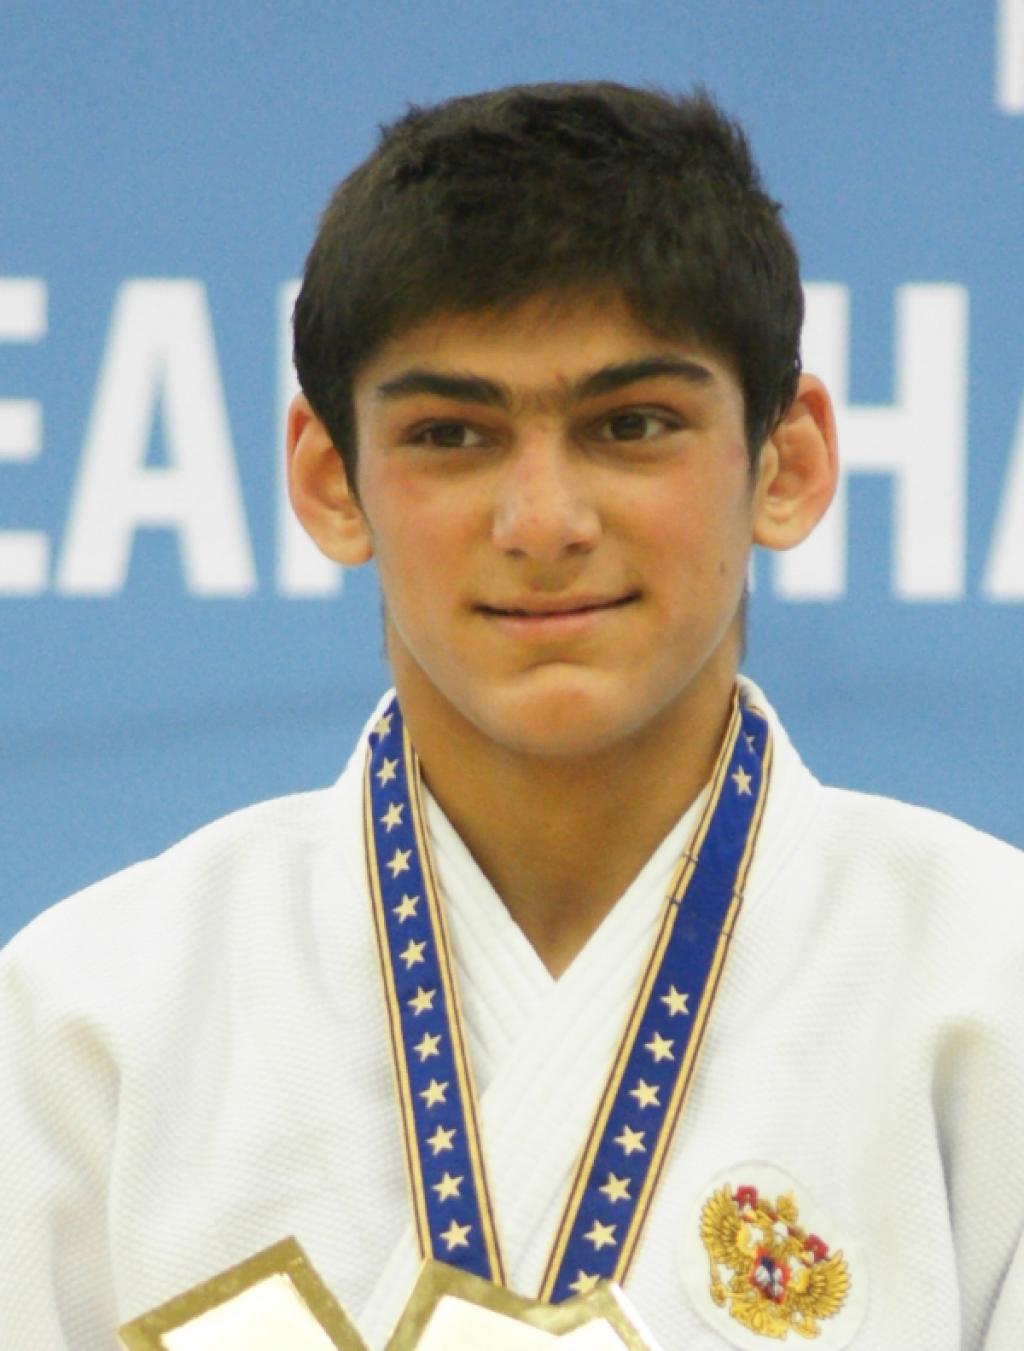 Sakhavat Gadzhiev takes second world title